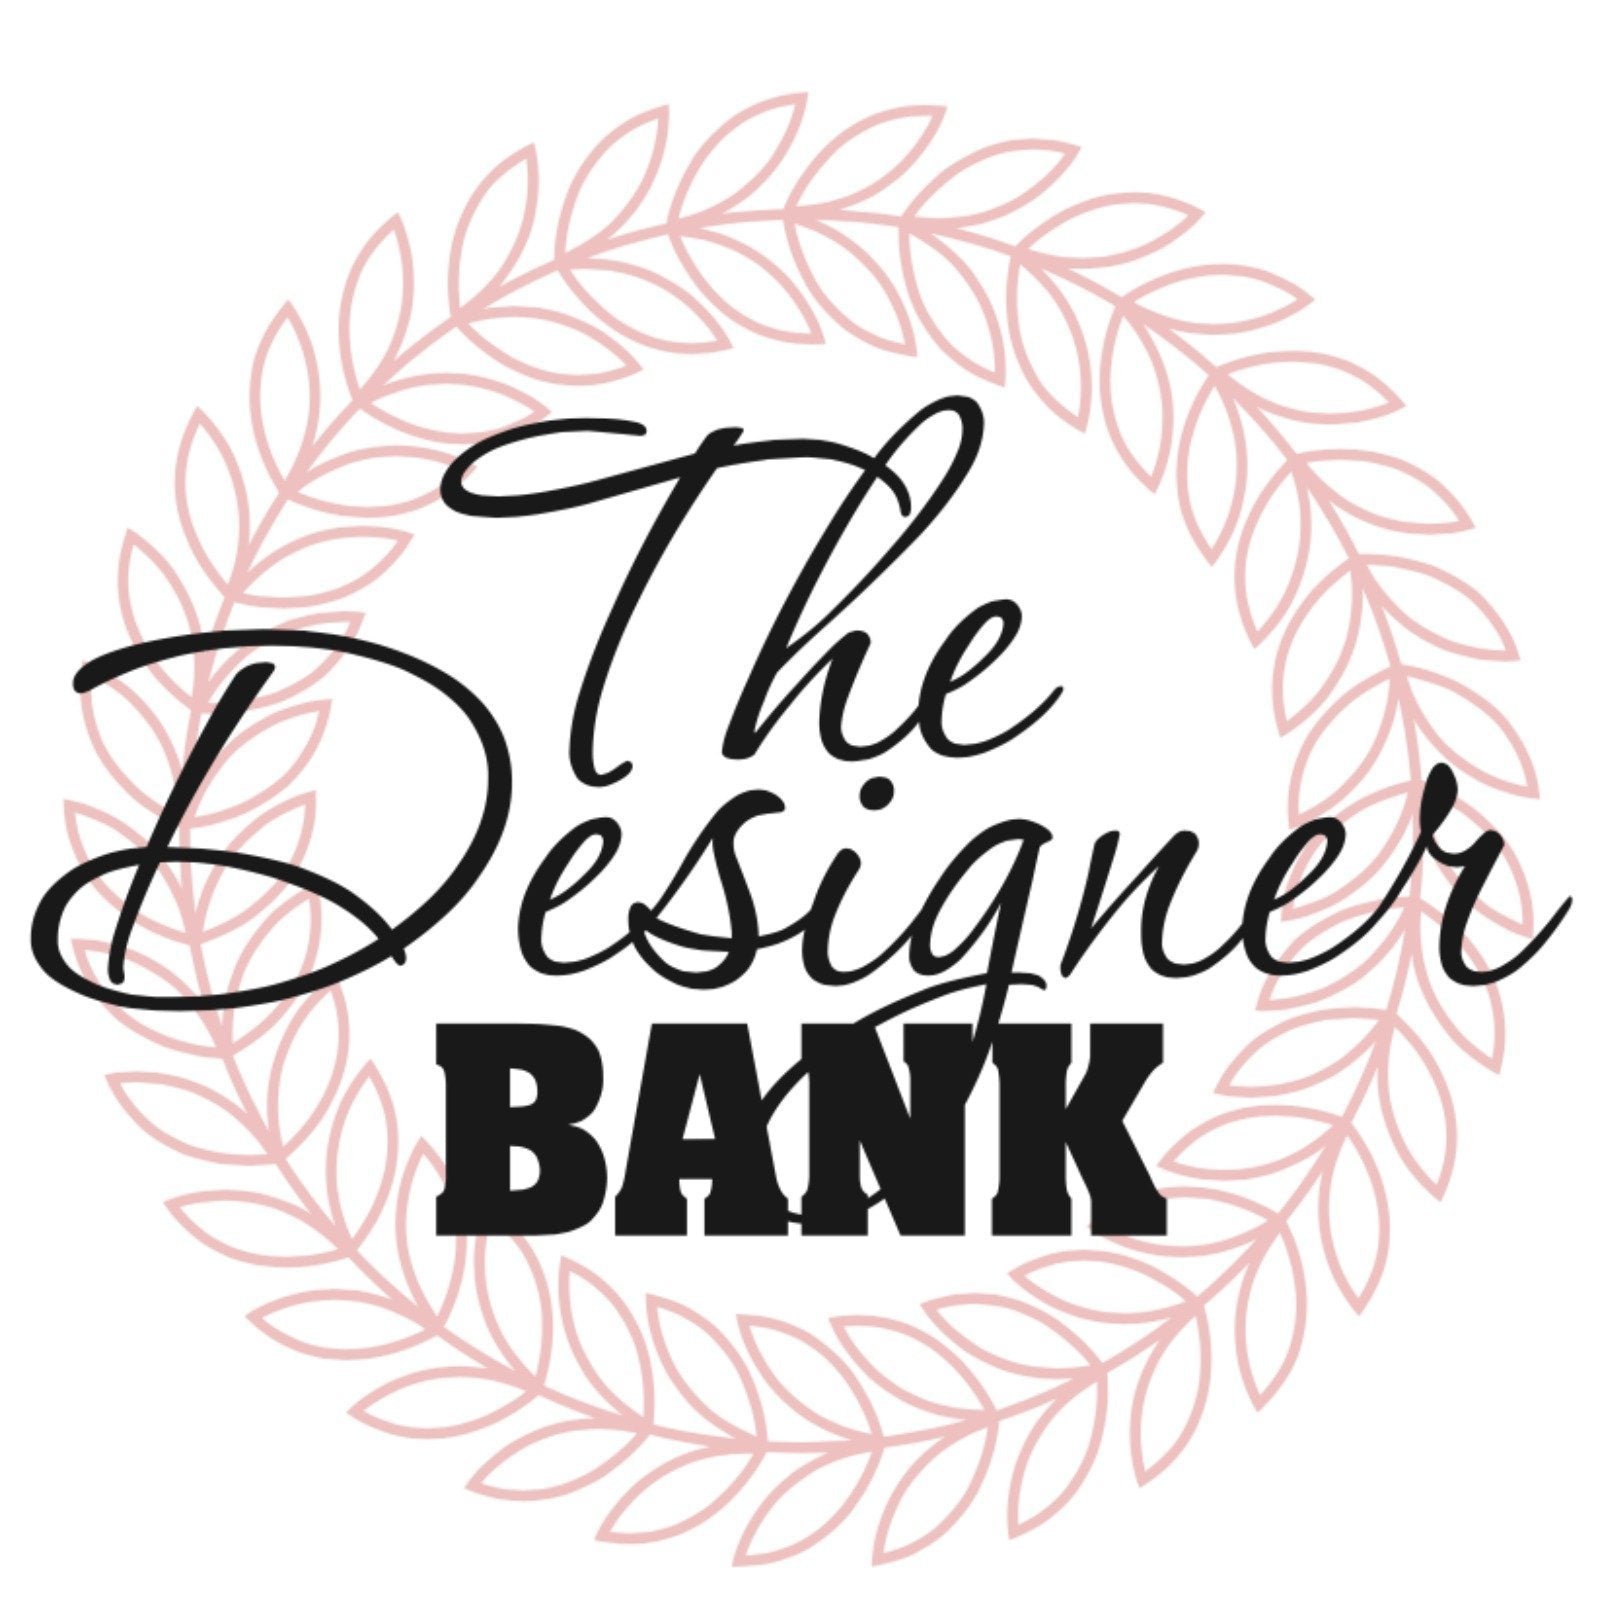 The Designer Bank